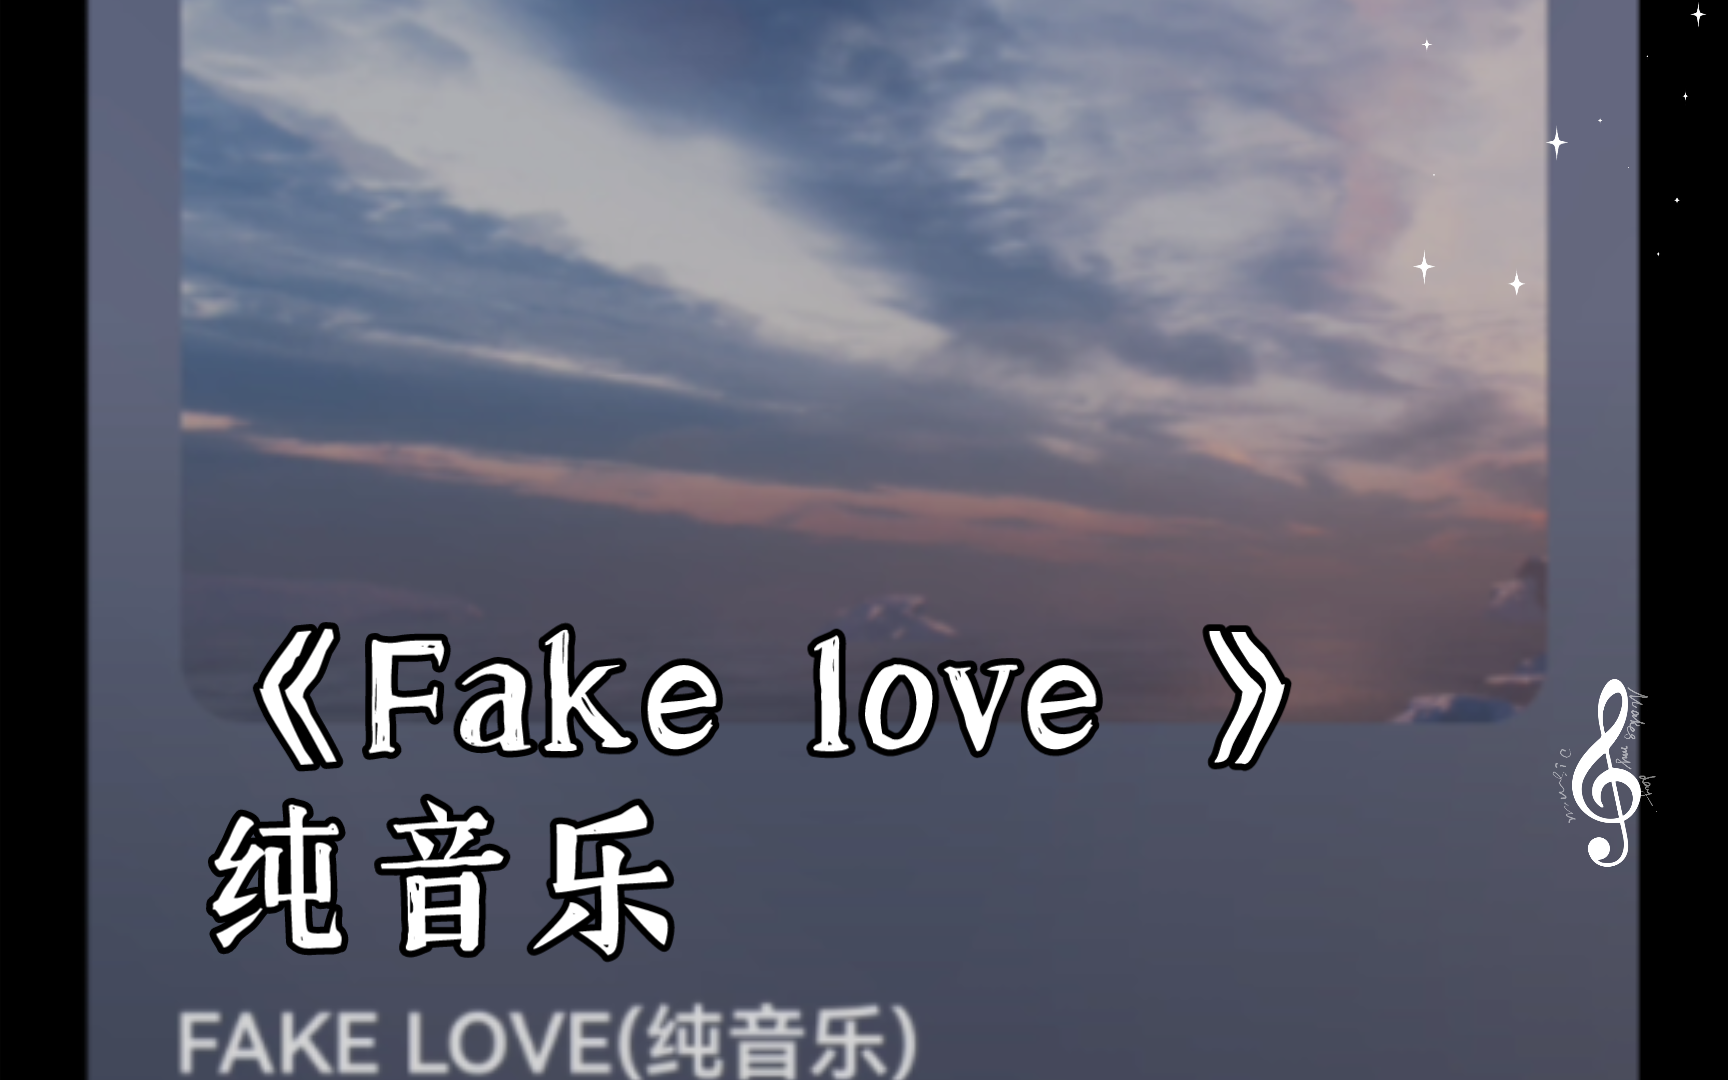 《fake love 》纯音乐 满满的回忆 你还记得ta吗